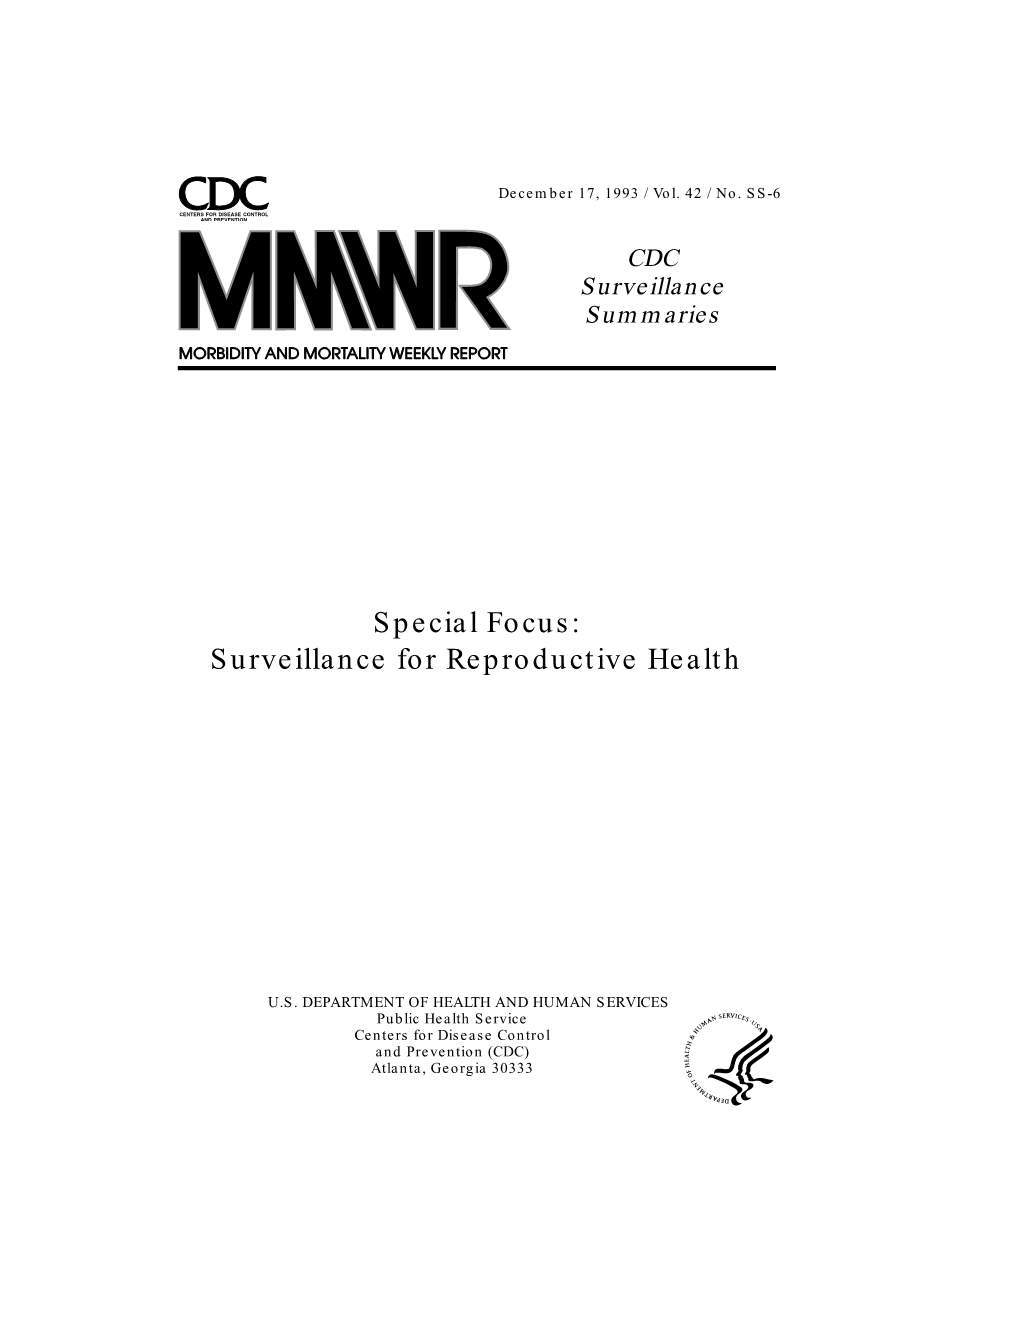 Special Focus: Surveillance for Reproductive Health